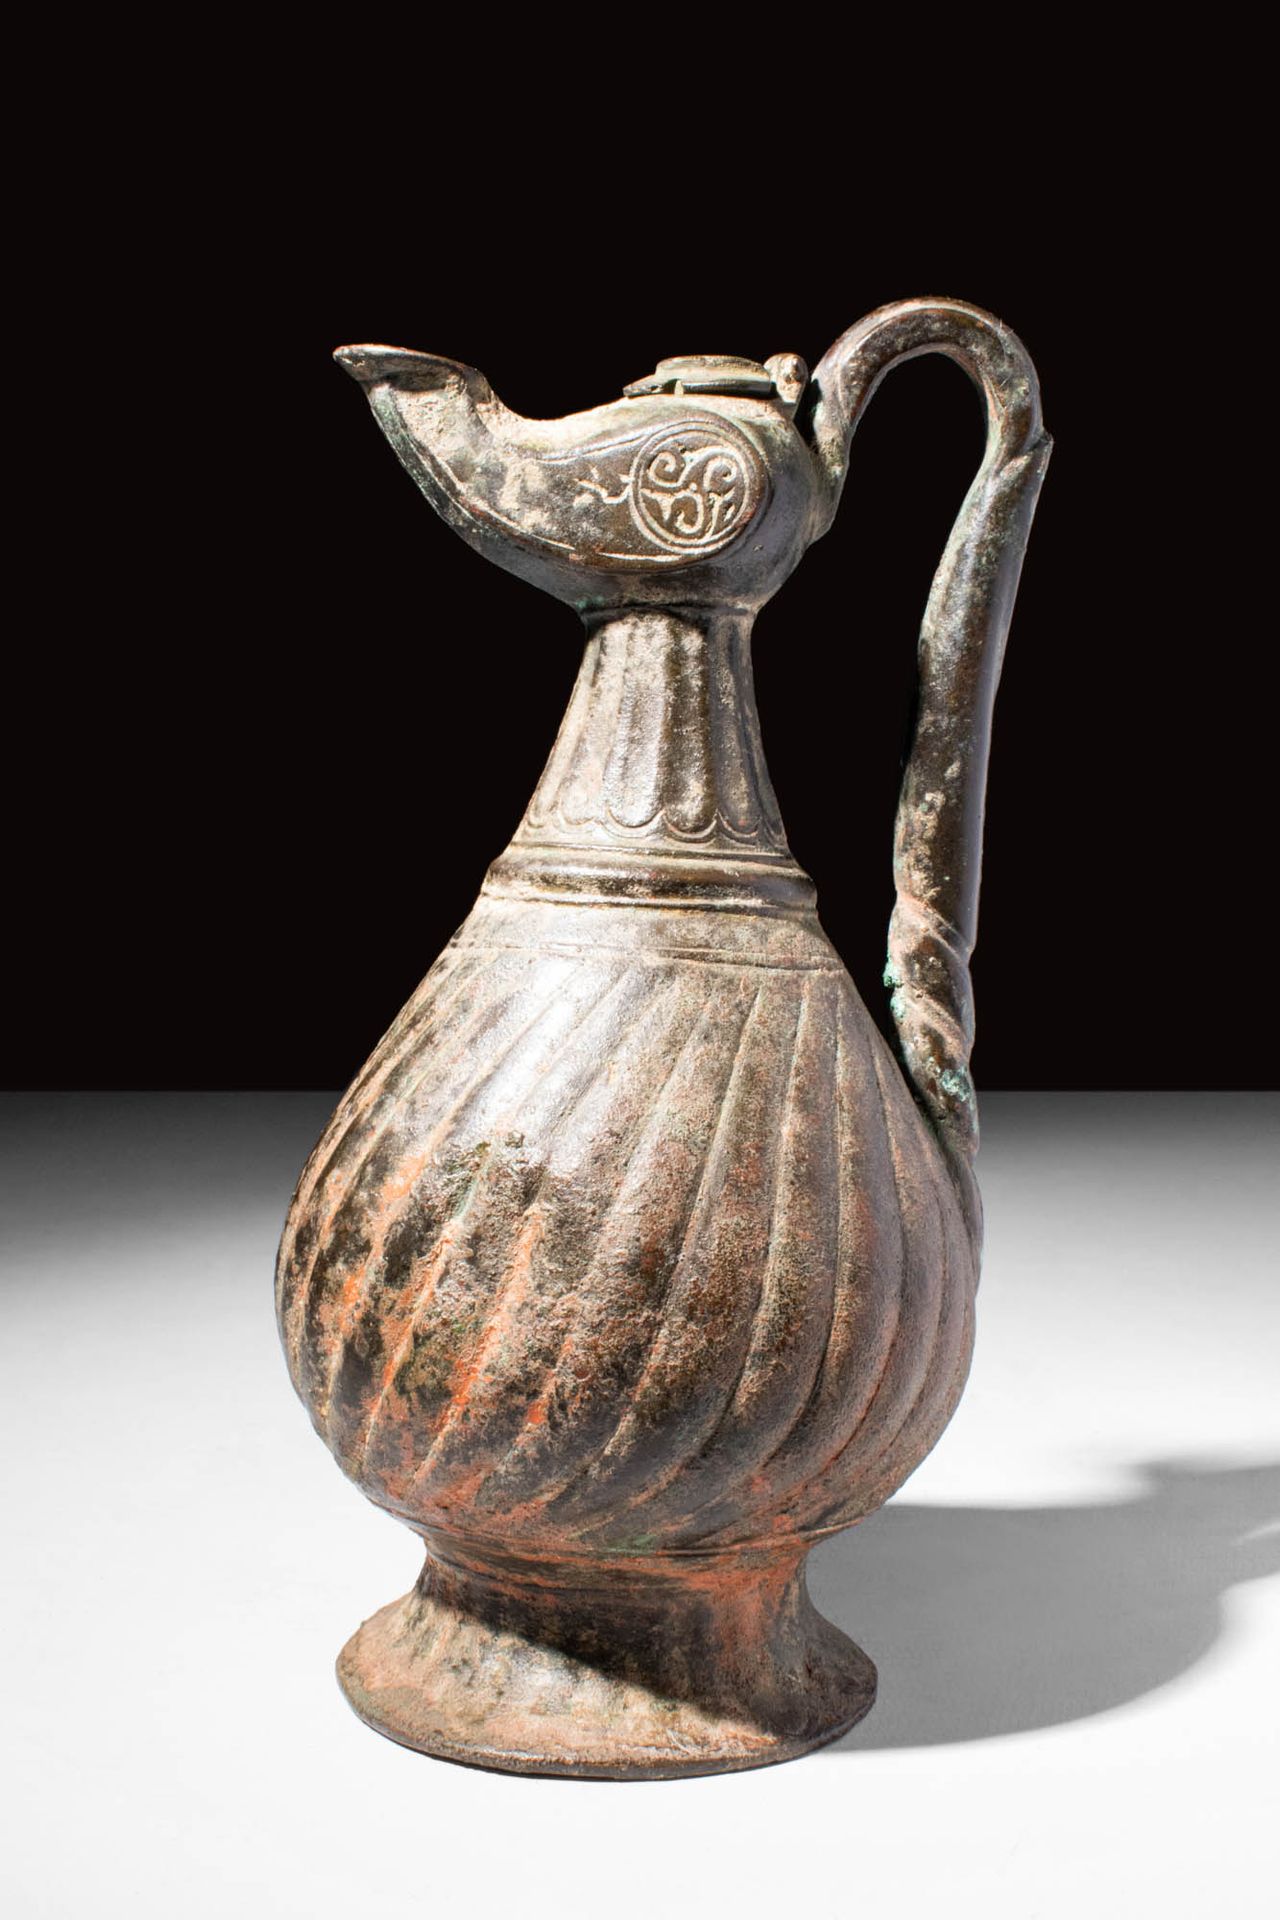 MEDIEVAL SELJUK BRONZE EWER 约公元 900 - 1100 年。公元 900 - 1100 年。
这是一件中世纪塞尔柱青铜酒壶，梨形壶&hellip;